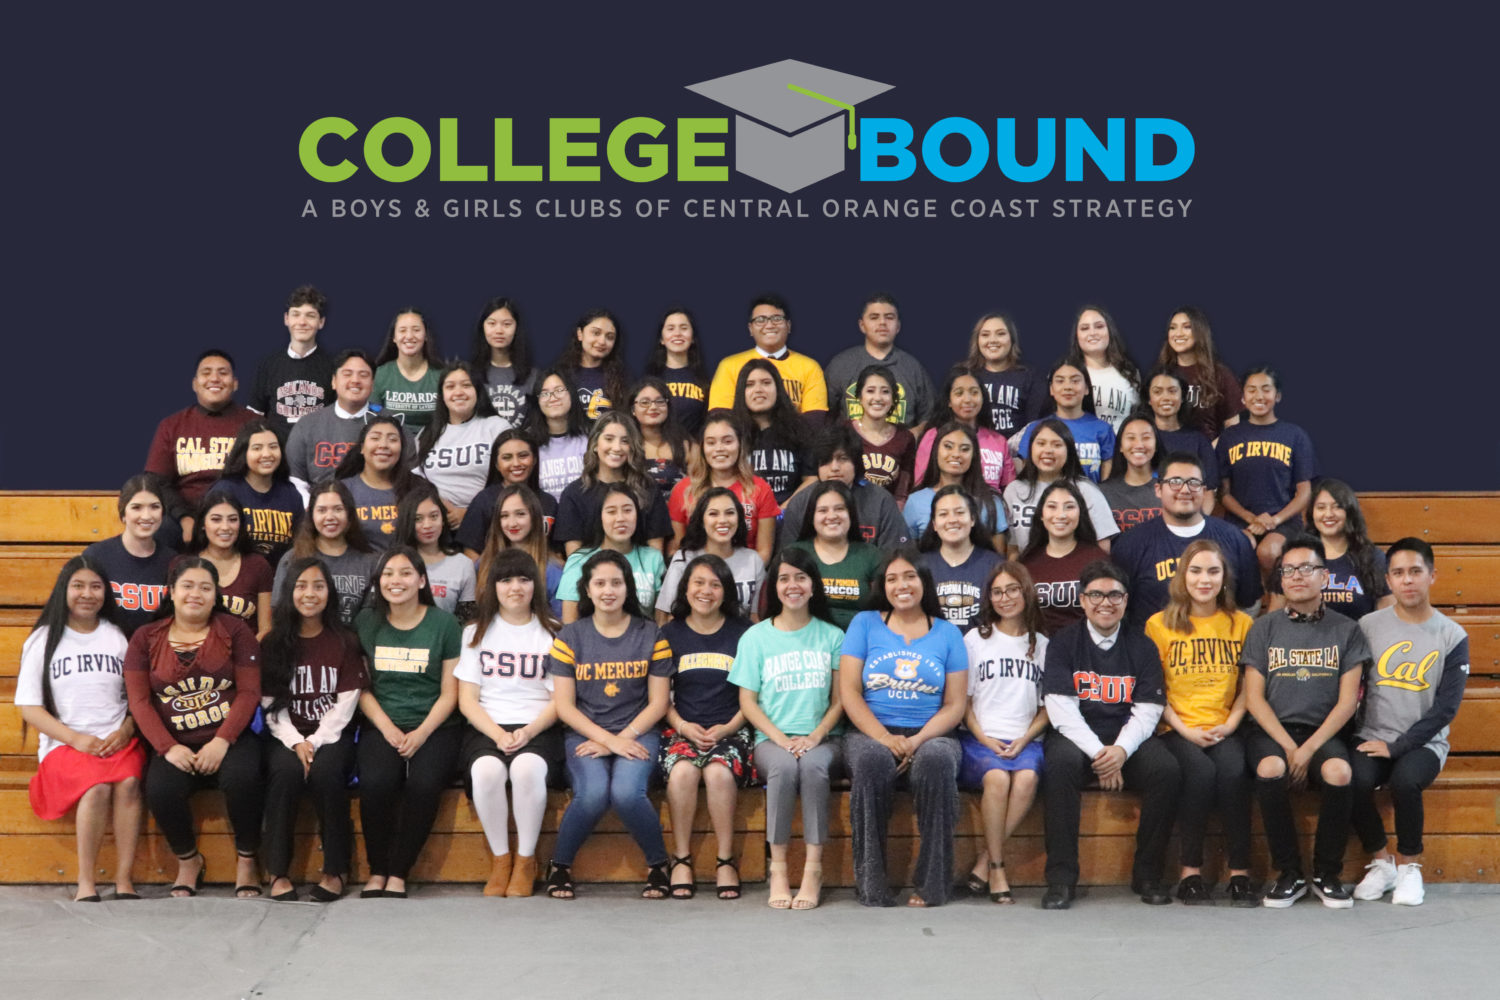 BGC College Bound Members group photo